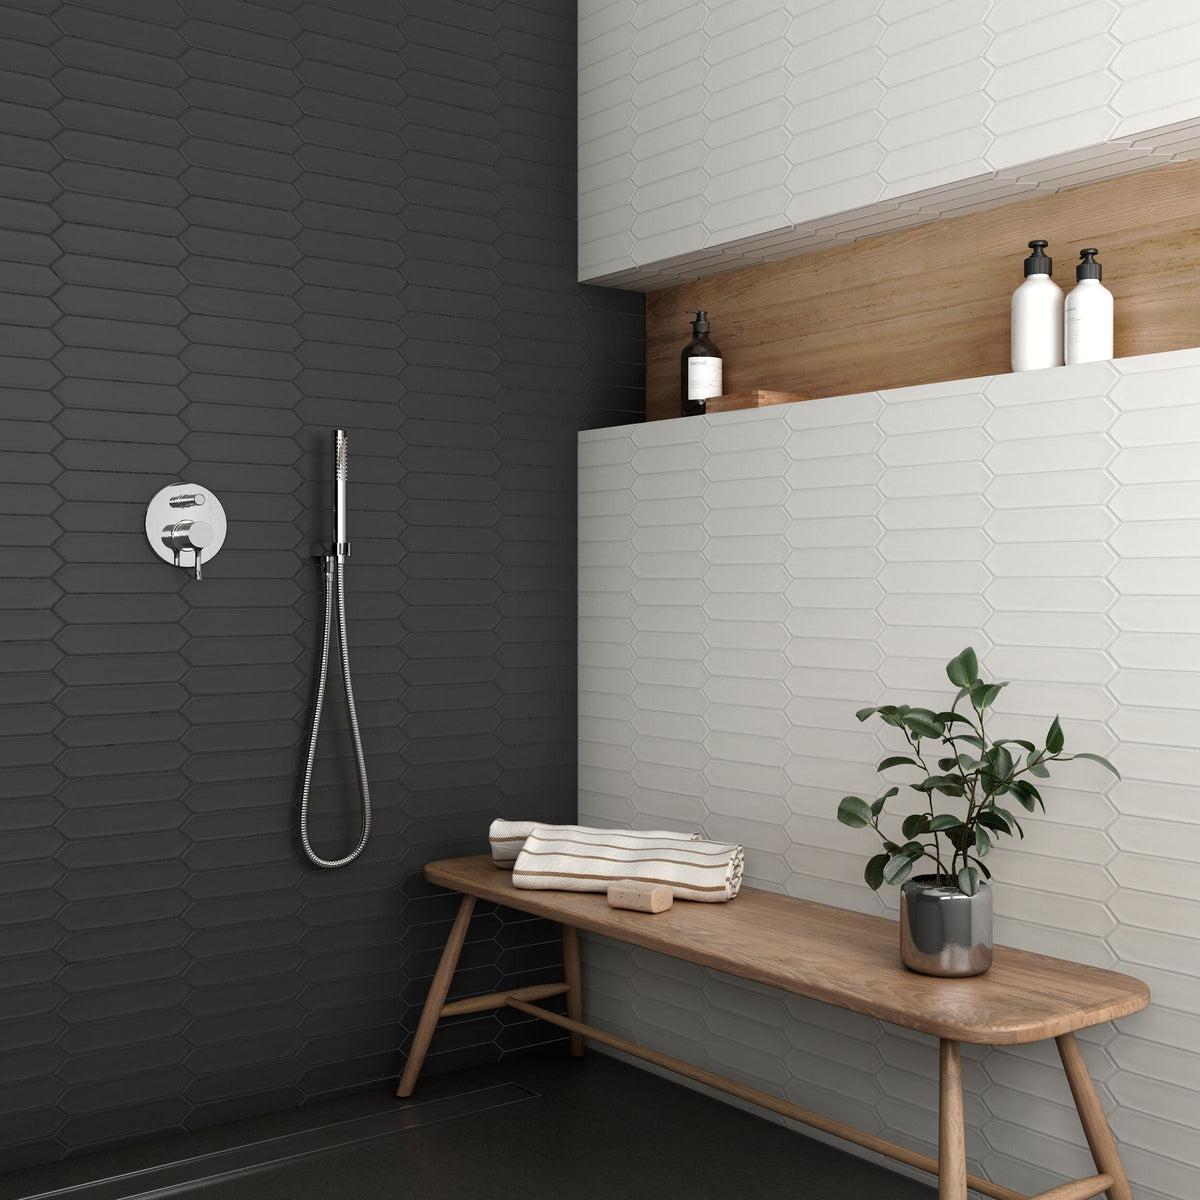 Black and white ceramic picket tile modern bathroom wall